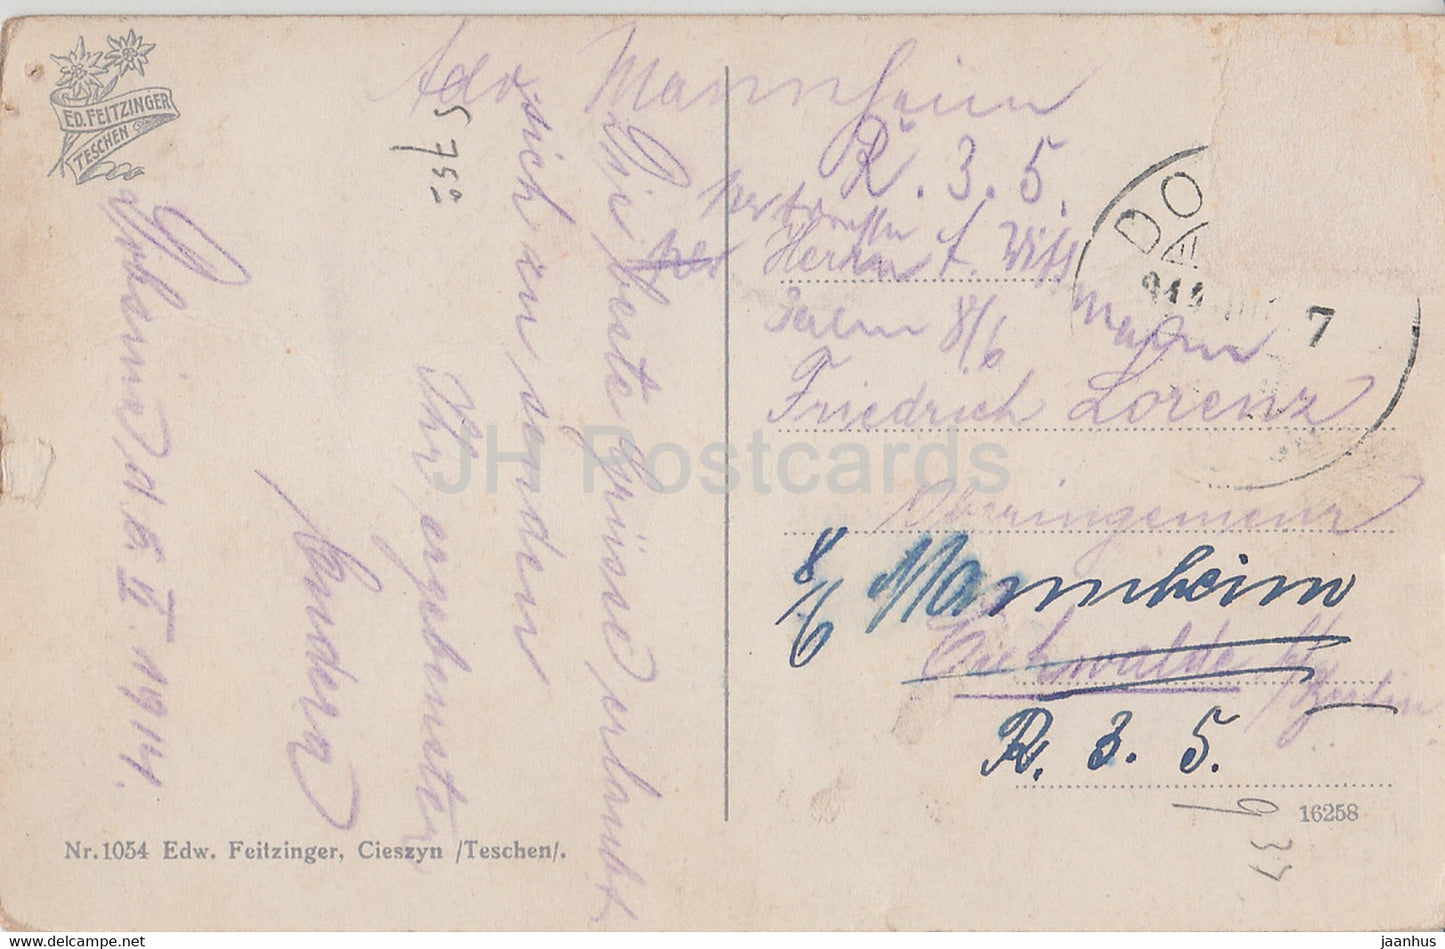 Tatry - Morskie Oko - Nagy halas to - Crosser Fischsee - Tatra - 1054 - old postcard - Poland - used